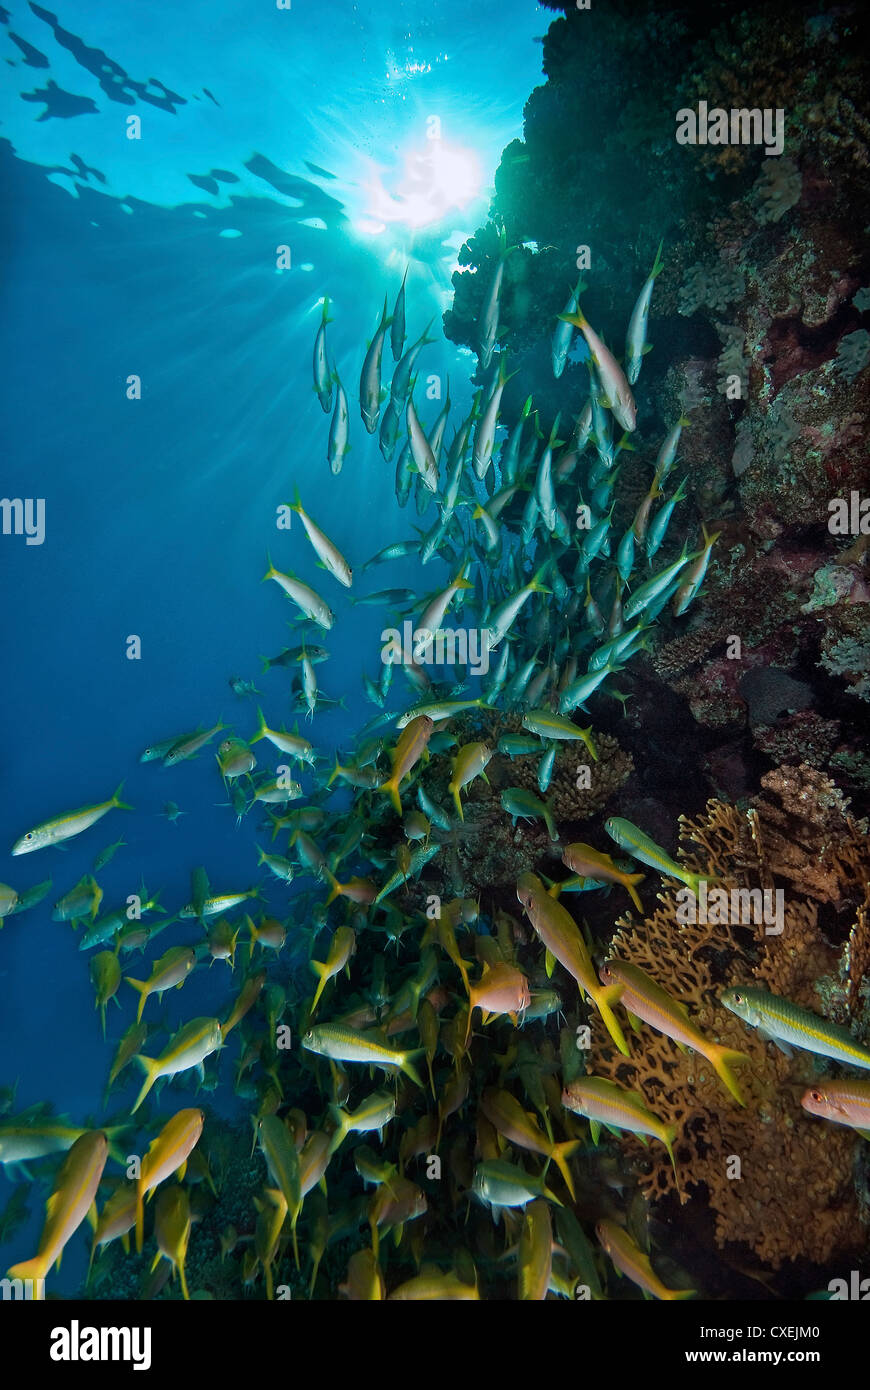 School of fish scuttling across reef under a sunburst surface Stock Photo